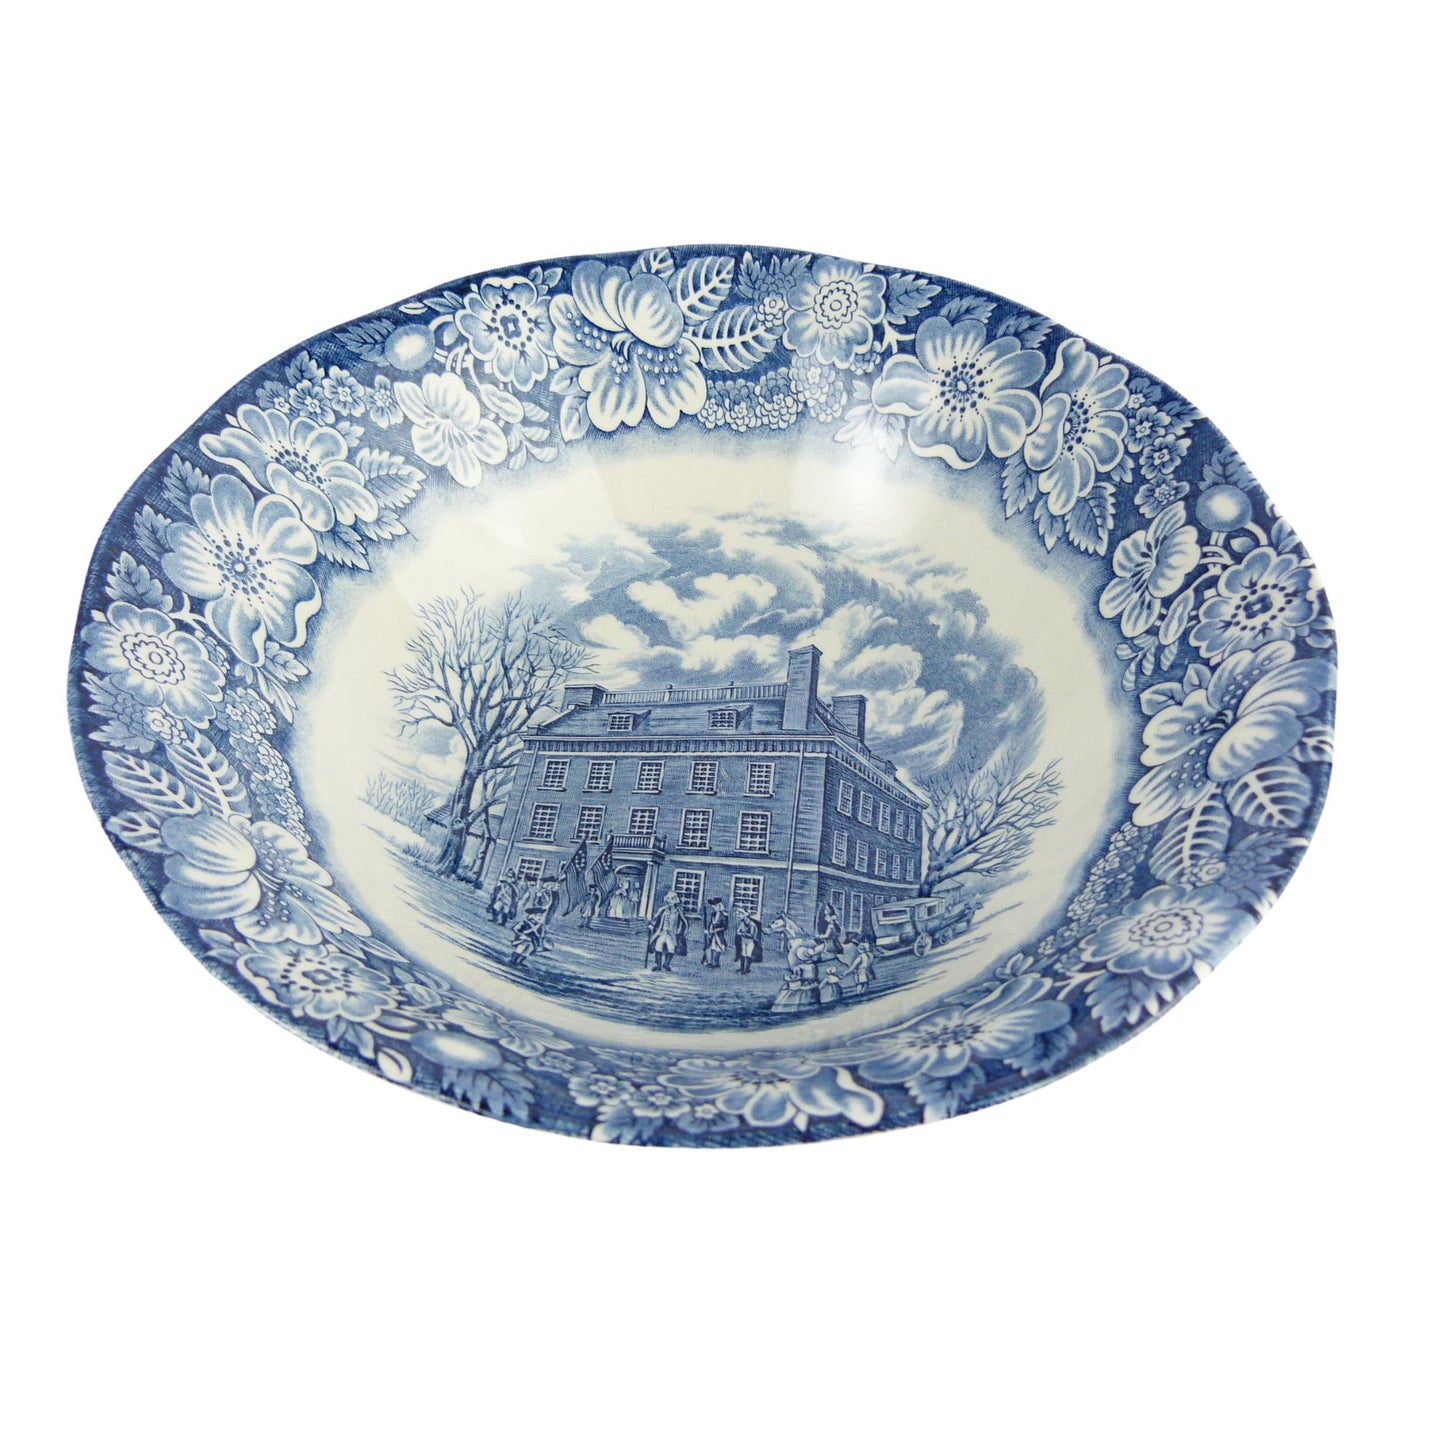 Vintage Wedgewood Liberty Blue Serving Bowl - 'Fraunces Tavern' Staffordshire Ironstone Bowl